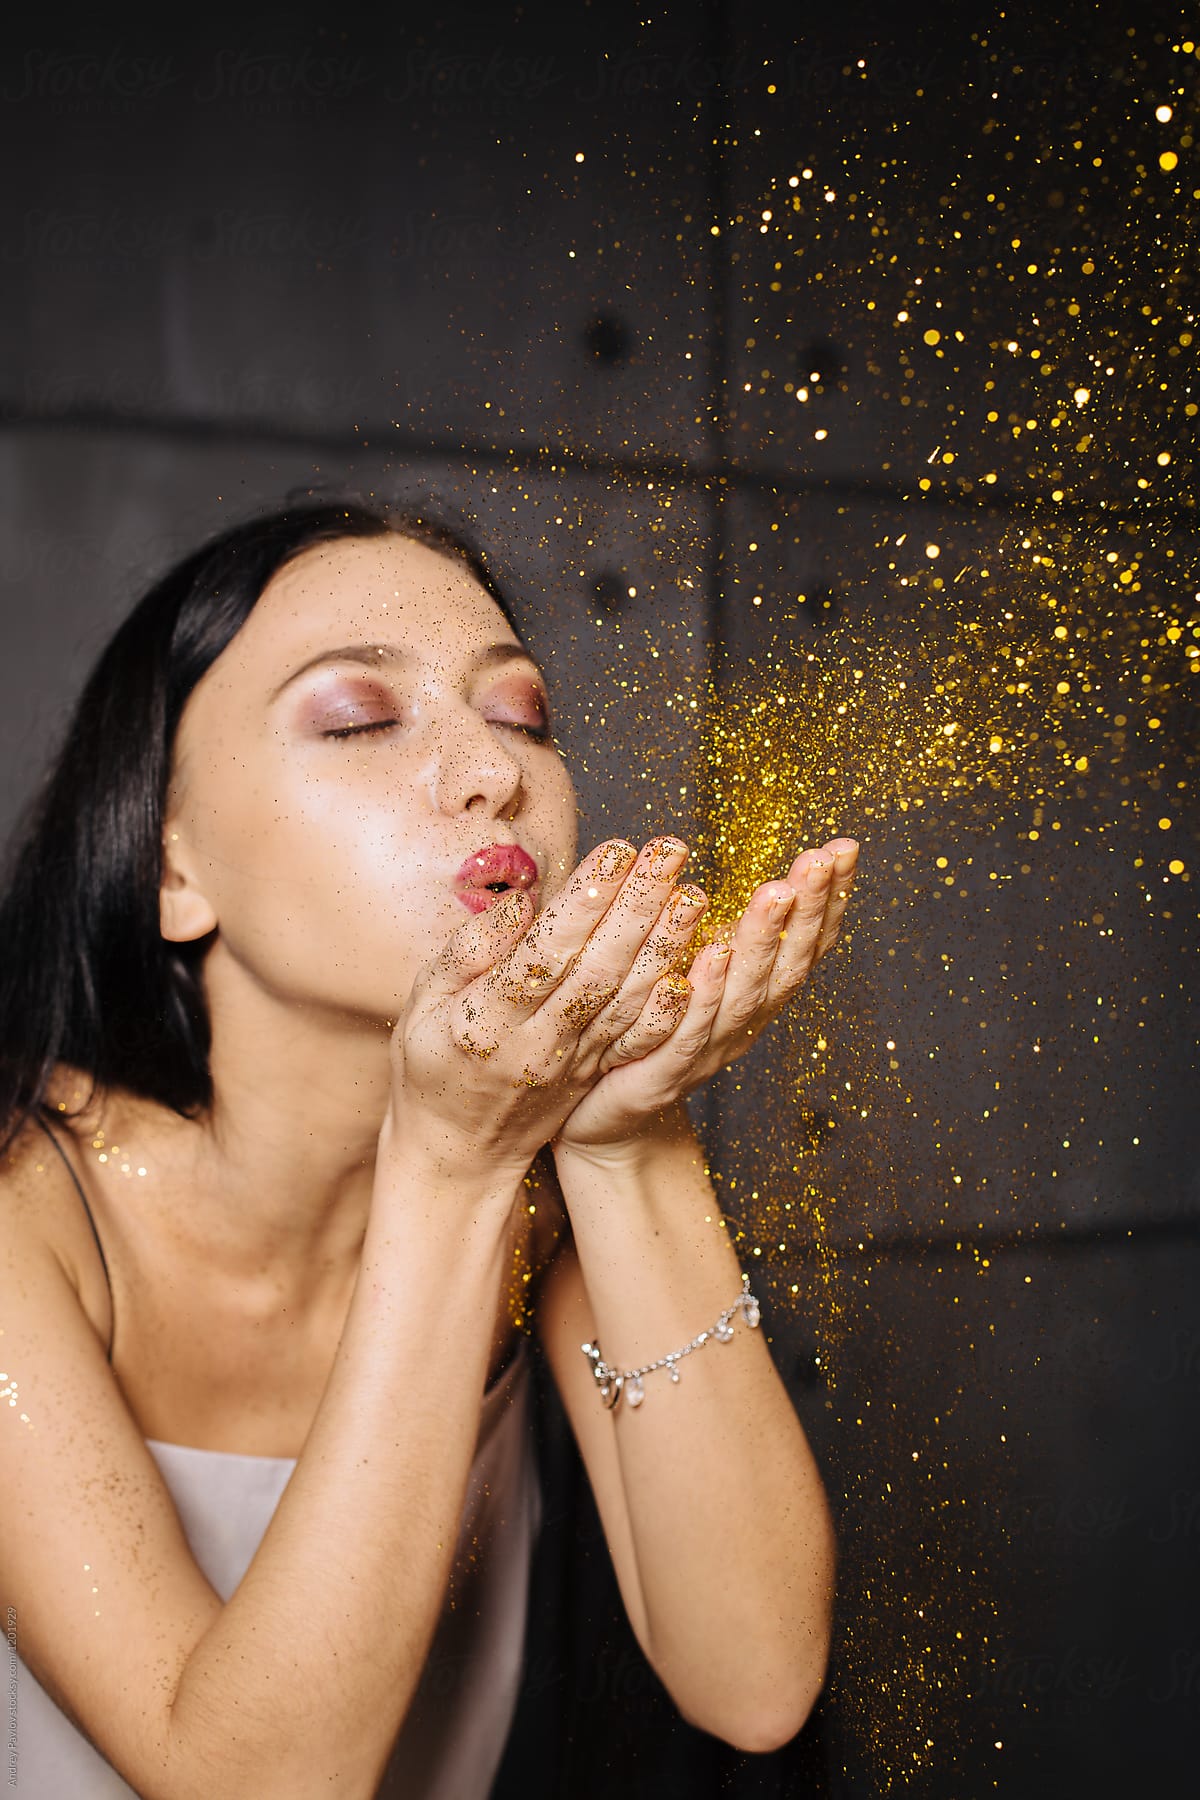 Girl Blowing Glitters Out Of Hands Del Colaborador De Stocksy Andrey Pavlov Stocksy 